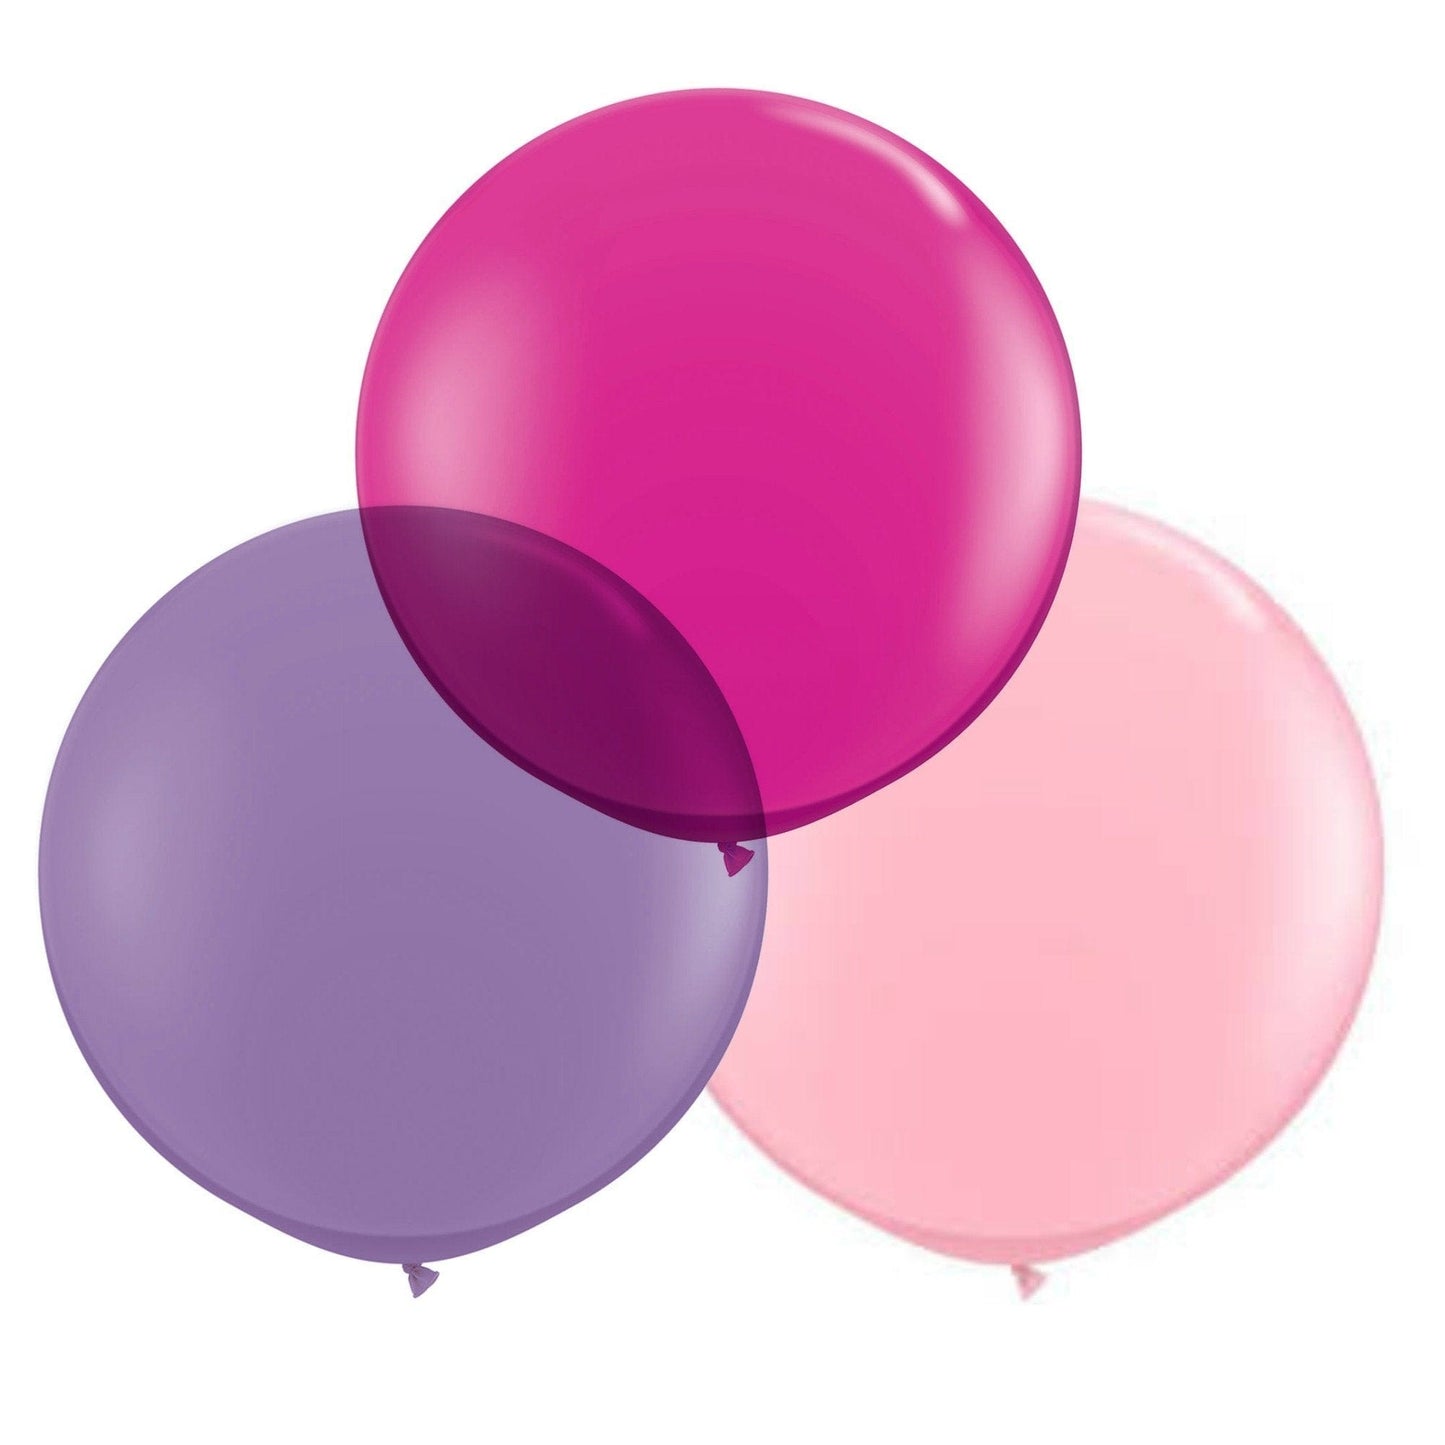 24" Pink Round Latex Balloon | Big Round Balloons UK Unique